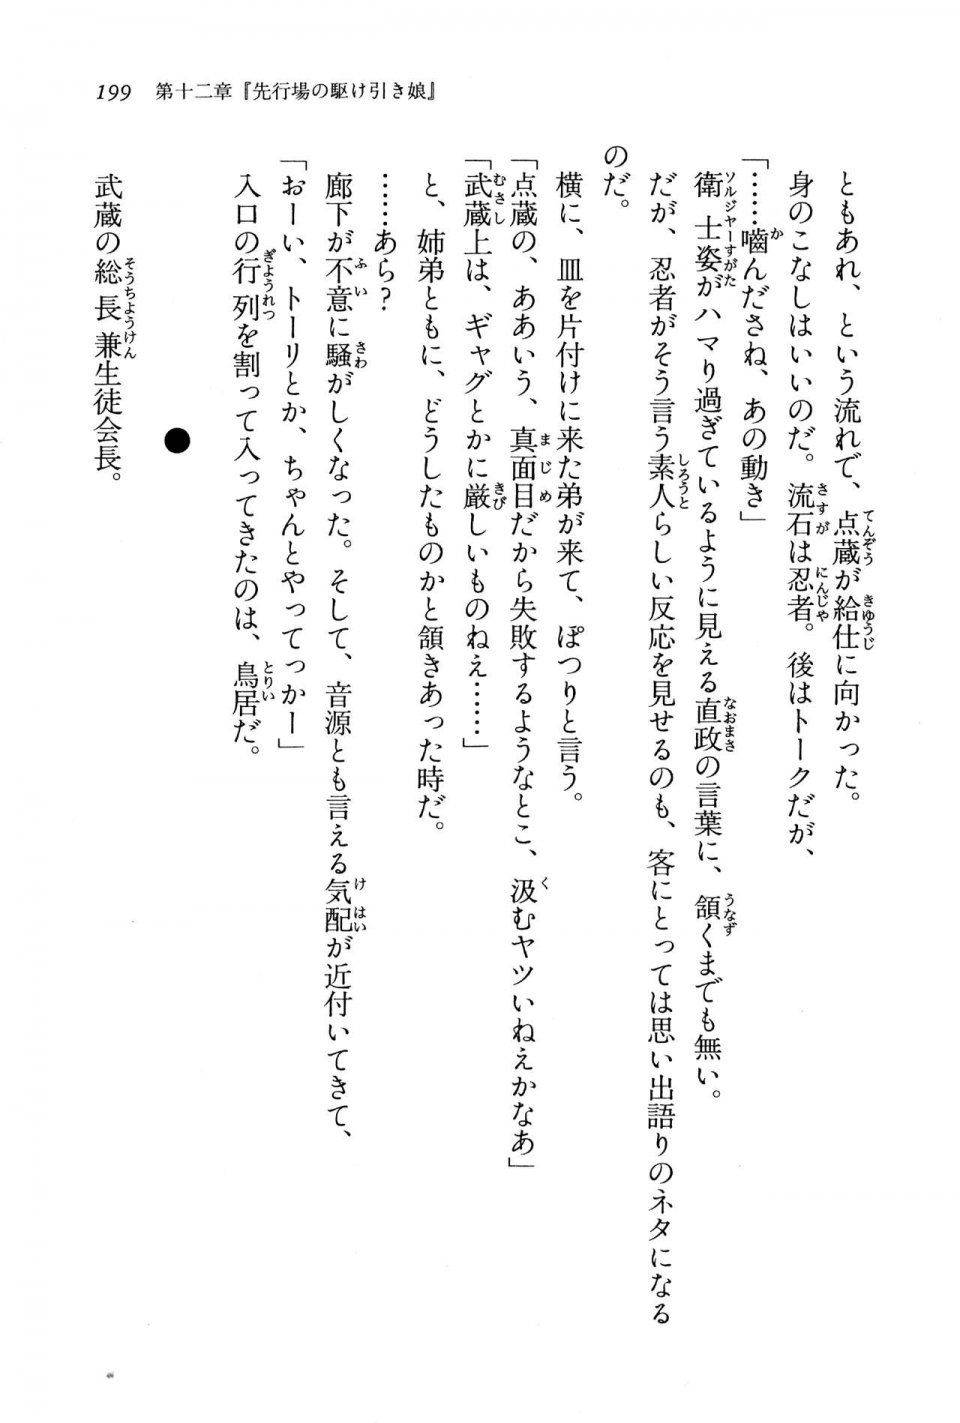 Kyoukai Senjou no Horizon BD Special Mininovel Vol 8(4B) - Photo #203